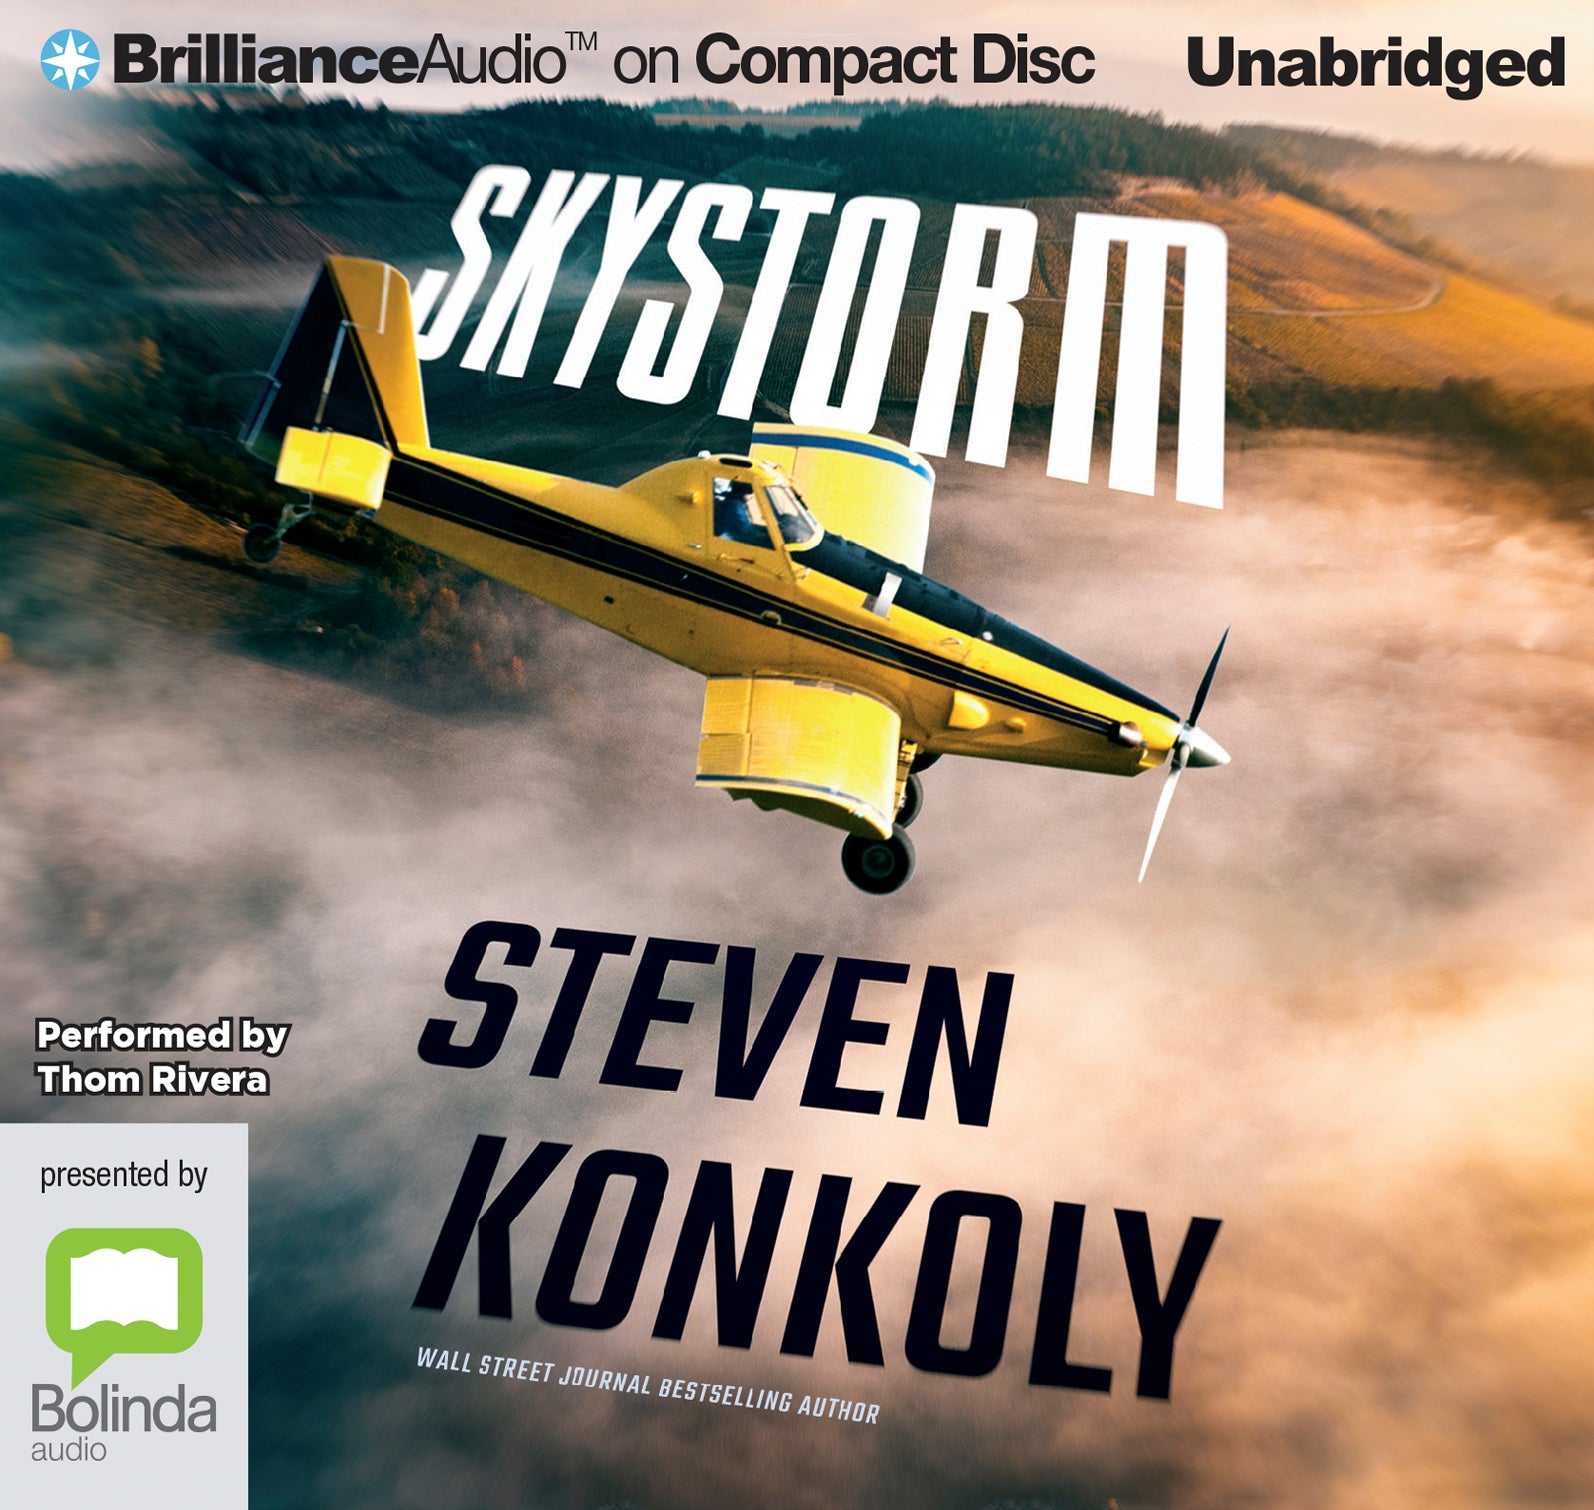 Skystorm - Unbridged Audio Book on CD